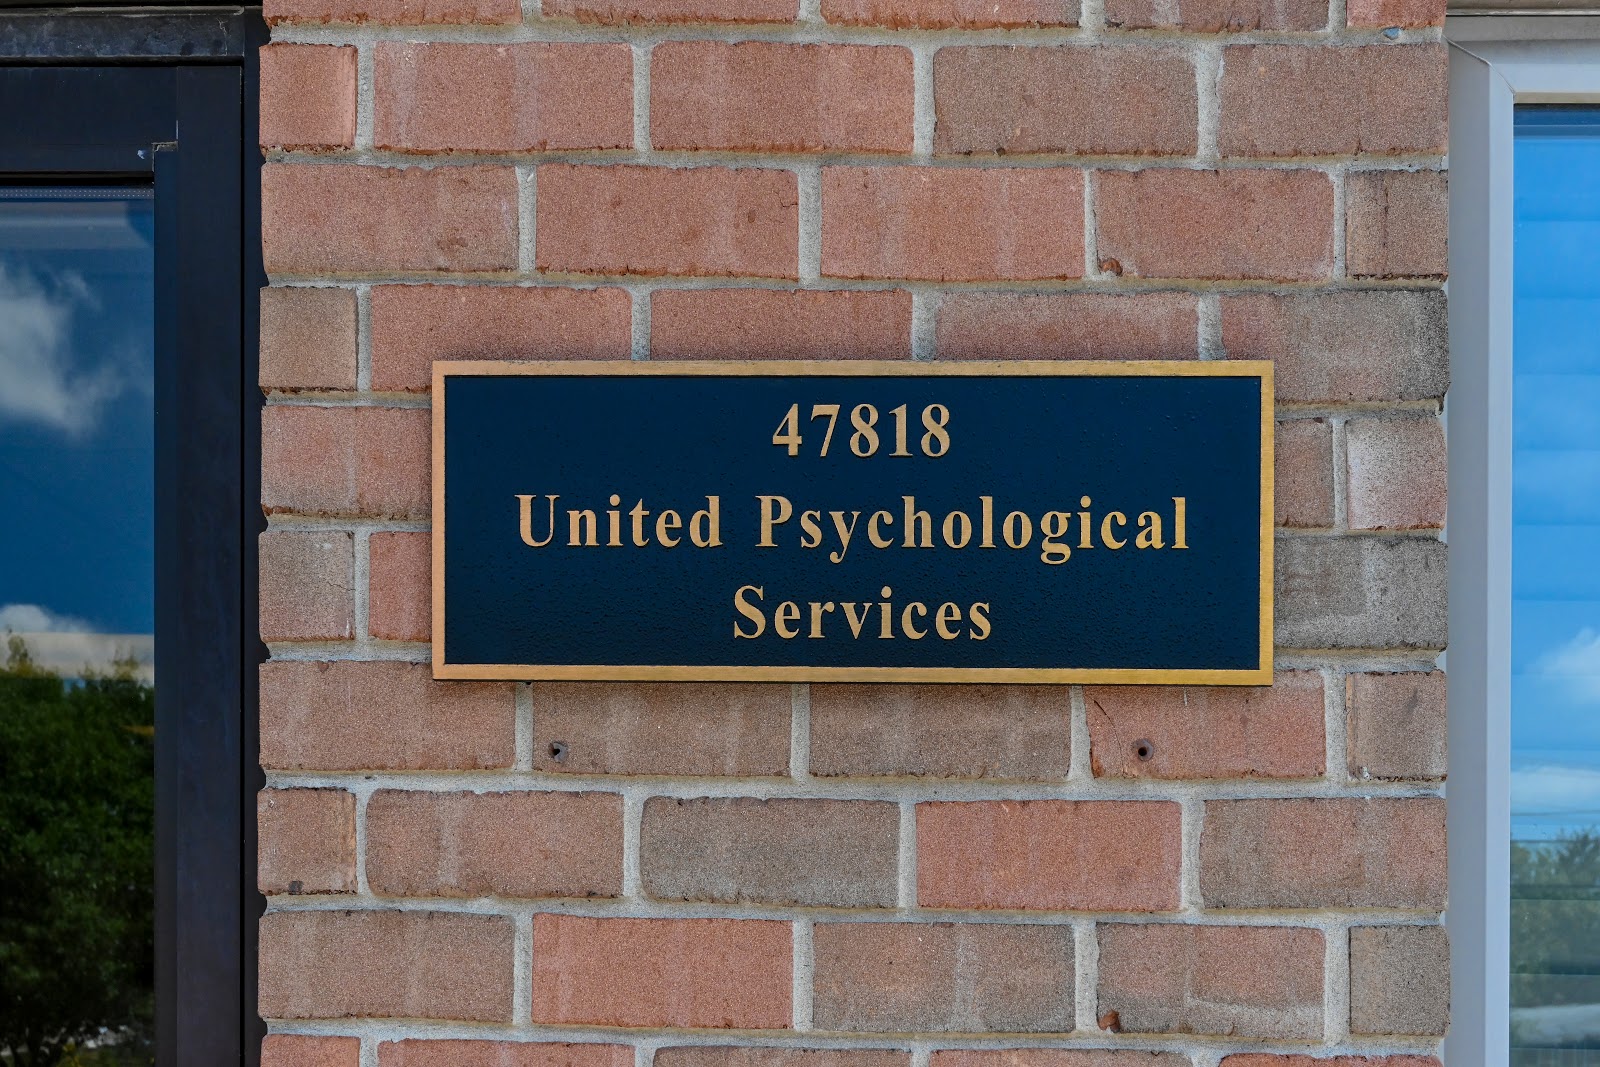 United Psychological Services